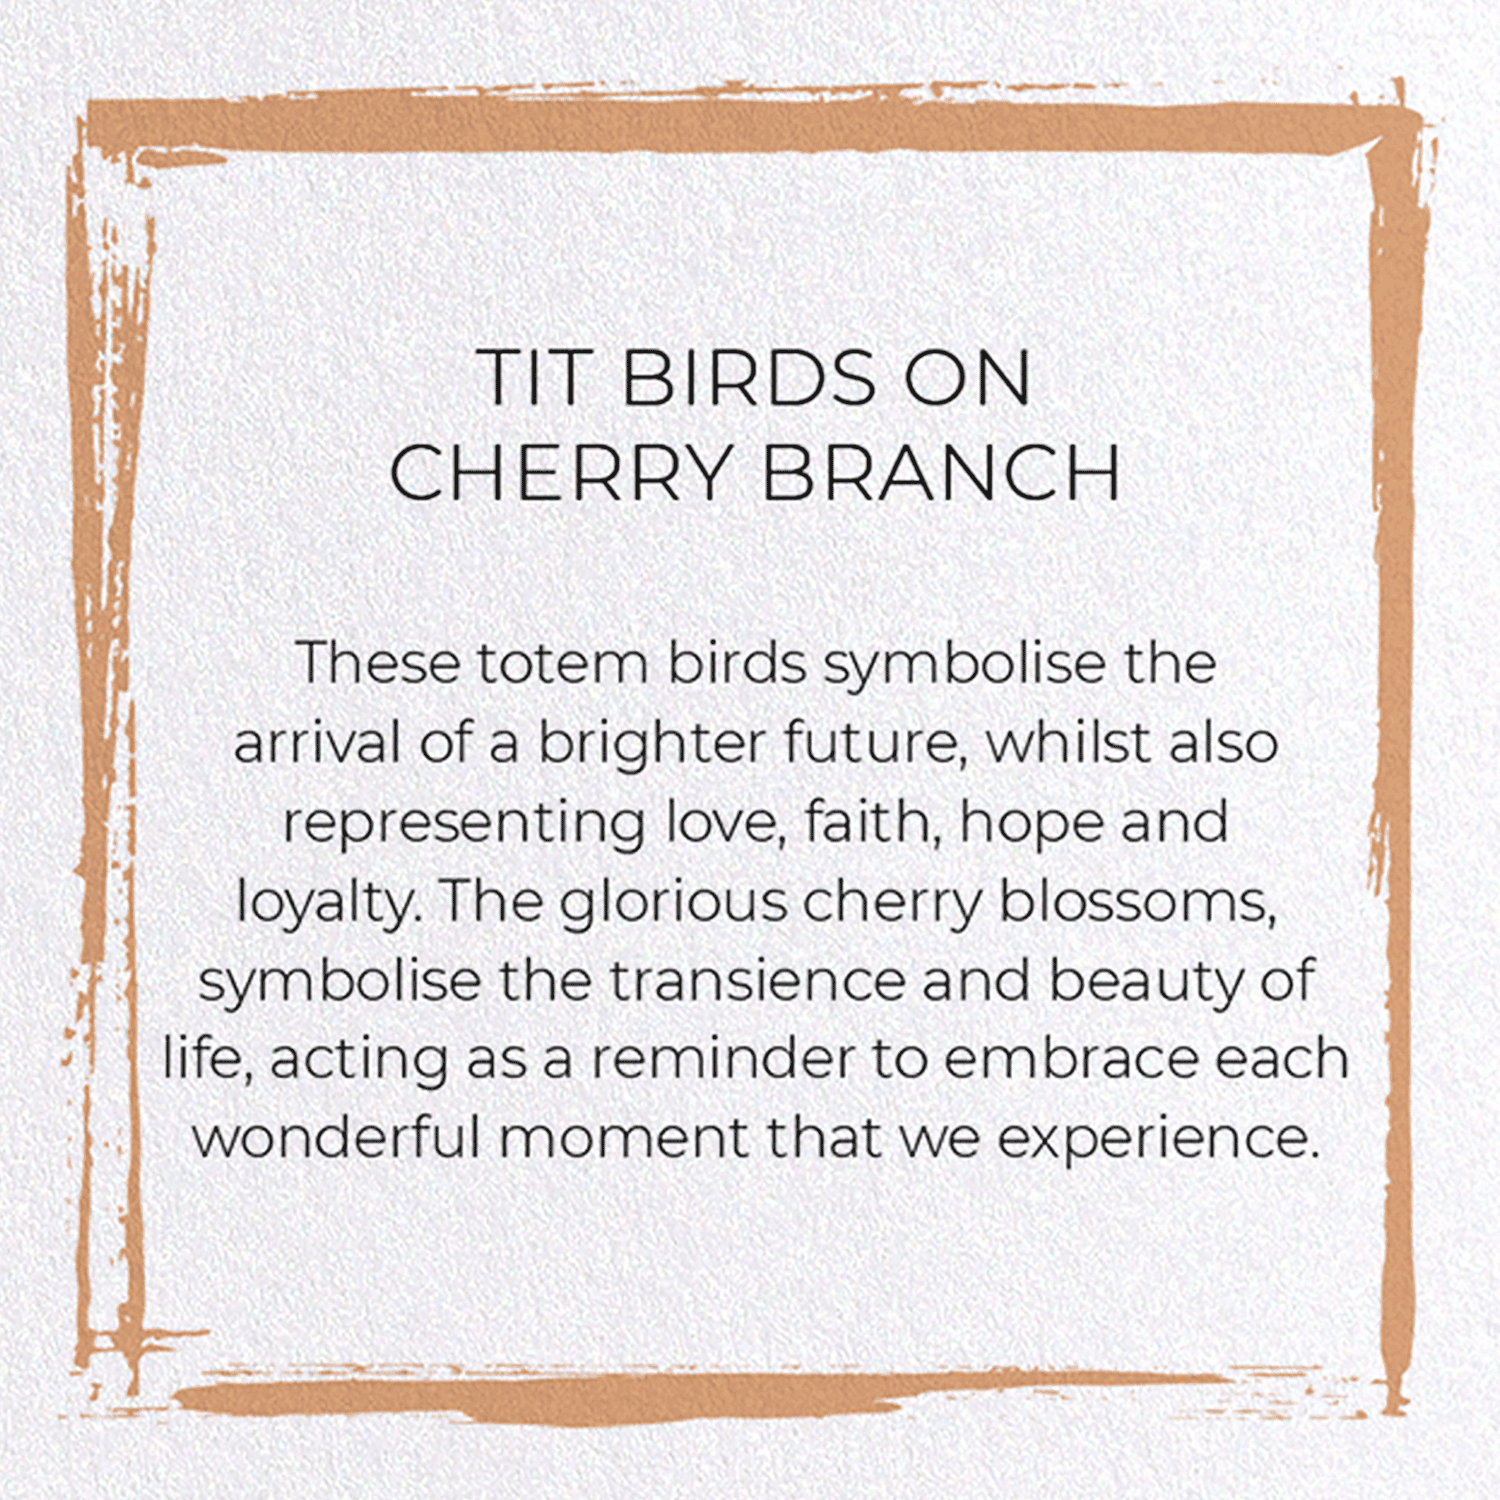 TIT BIRDS ON CHERRY BRANCH